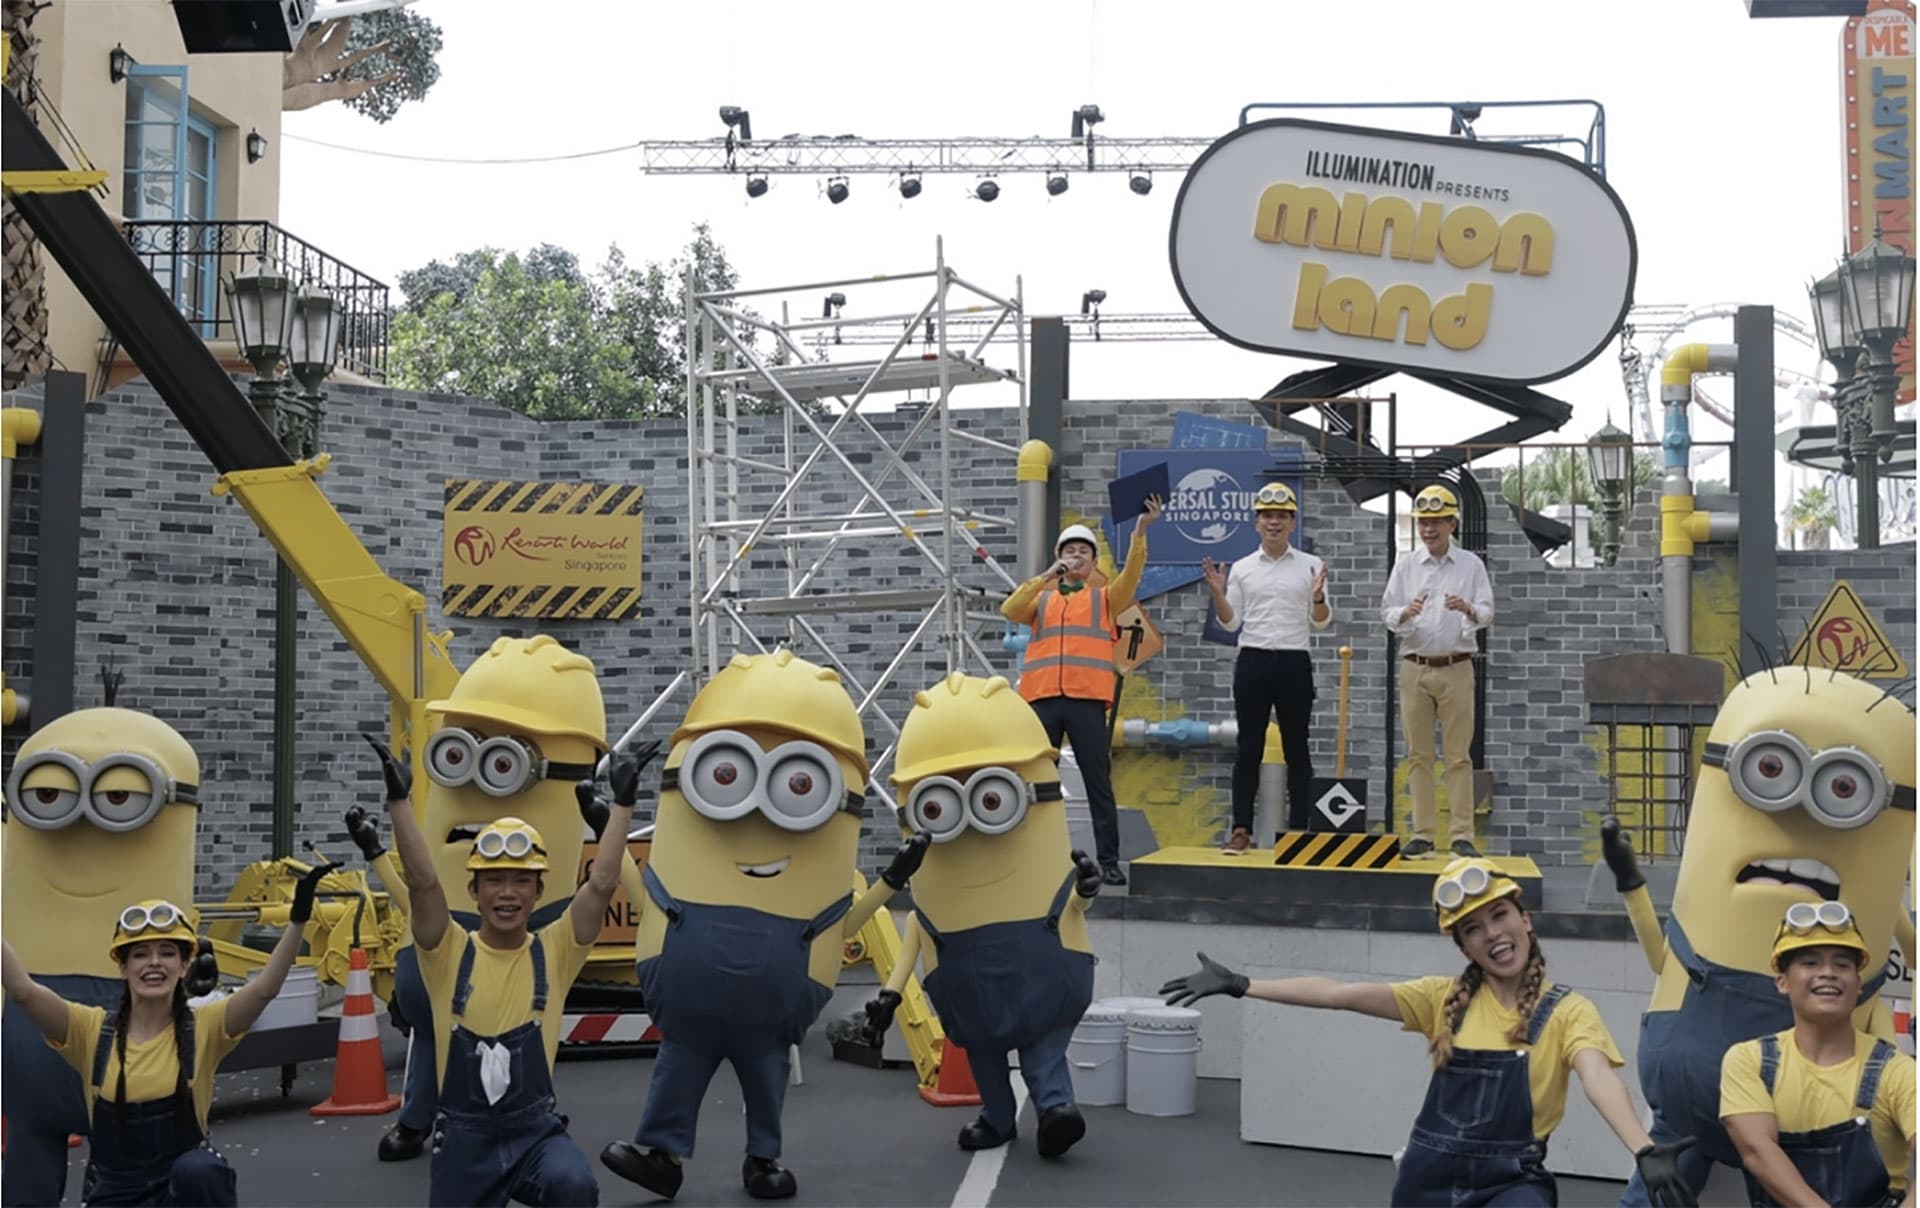 Universal Studios Singapore Breaks Ground on Minion Land